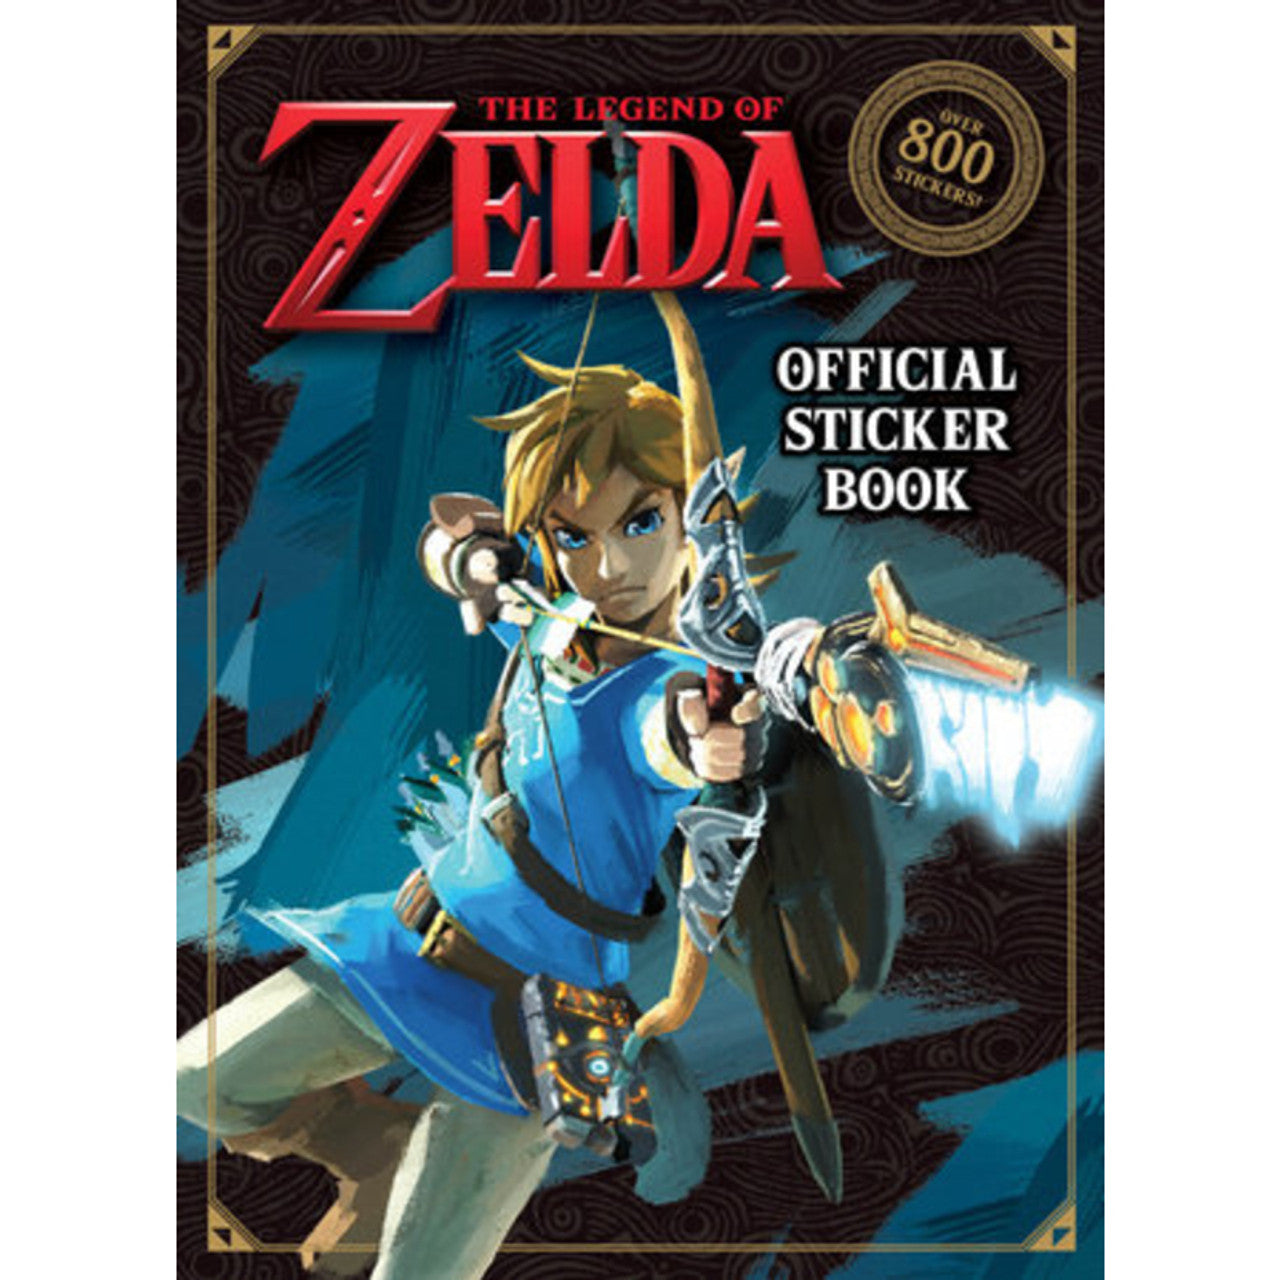 Random House - Legend of Zelda Official Sticker Book